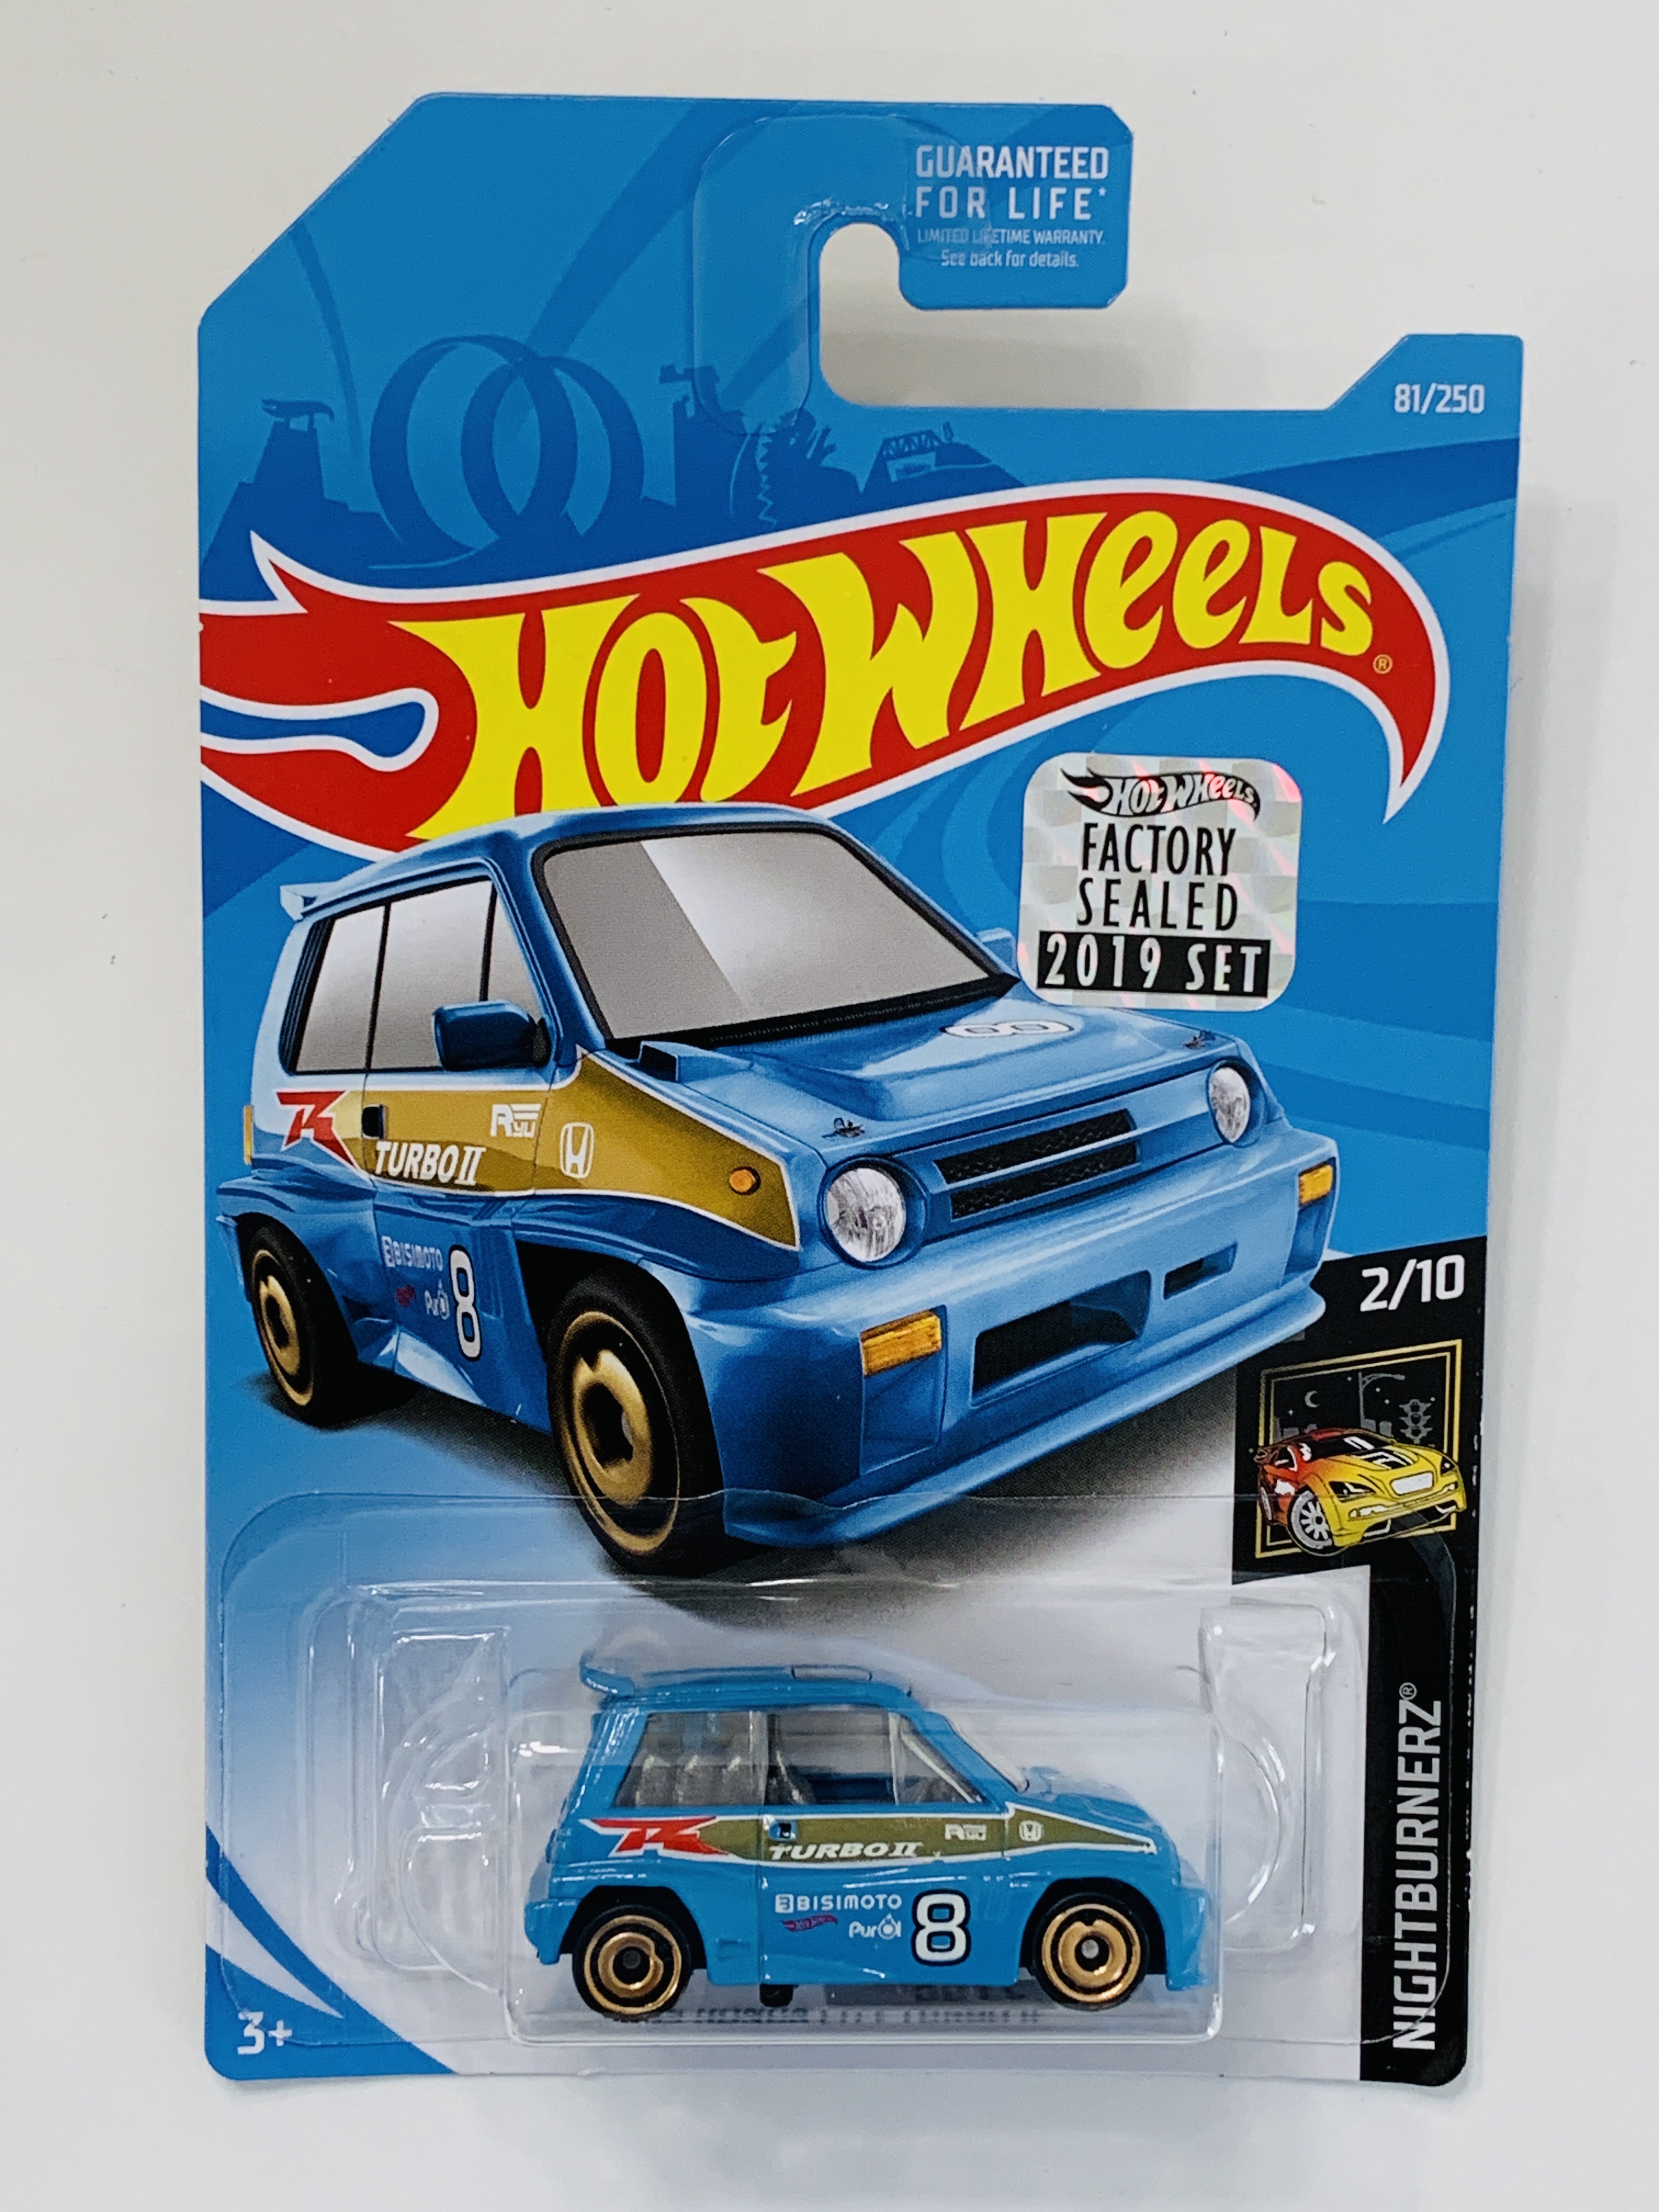 Hot Wheels 2019 Factory Set #81 '85 Honda City Turbo II - Blue